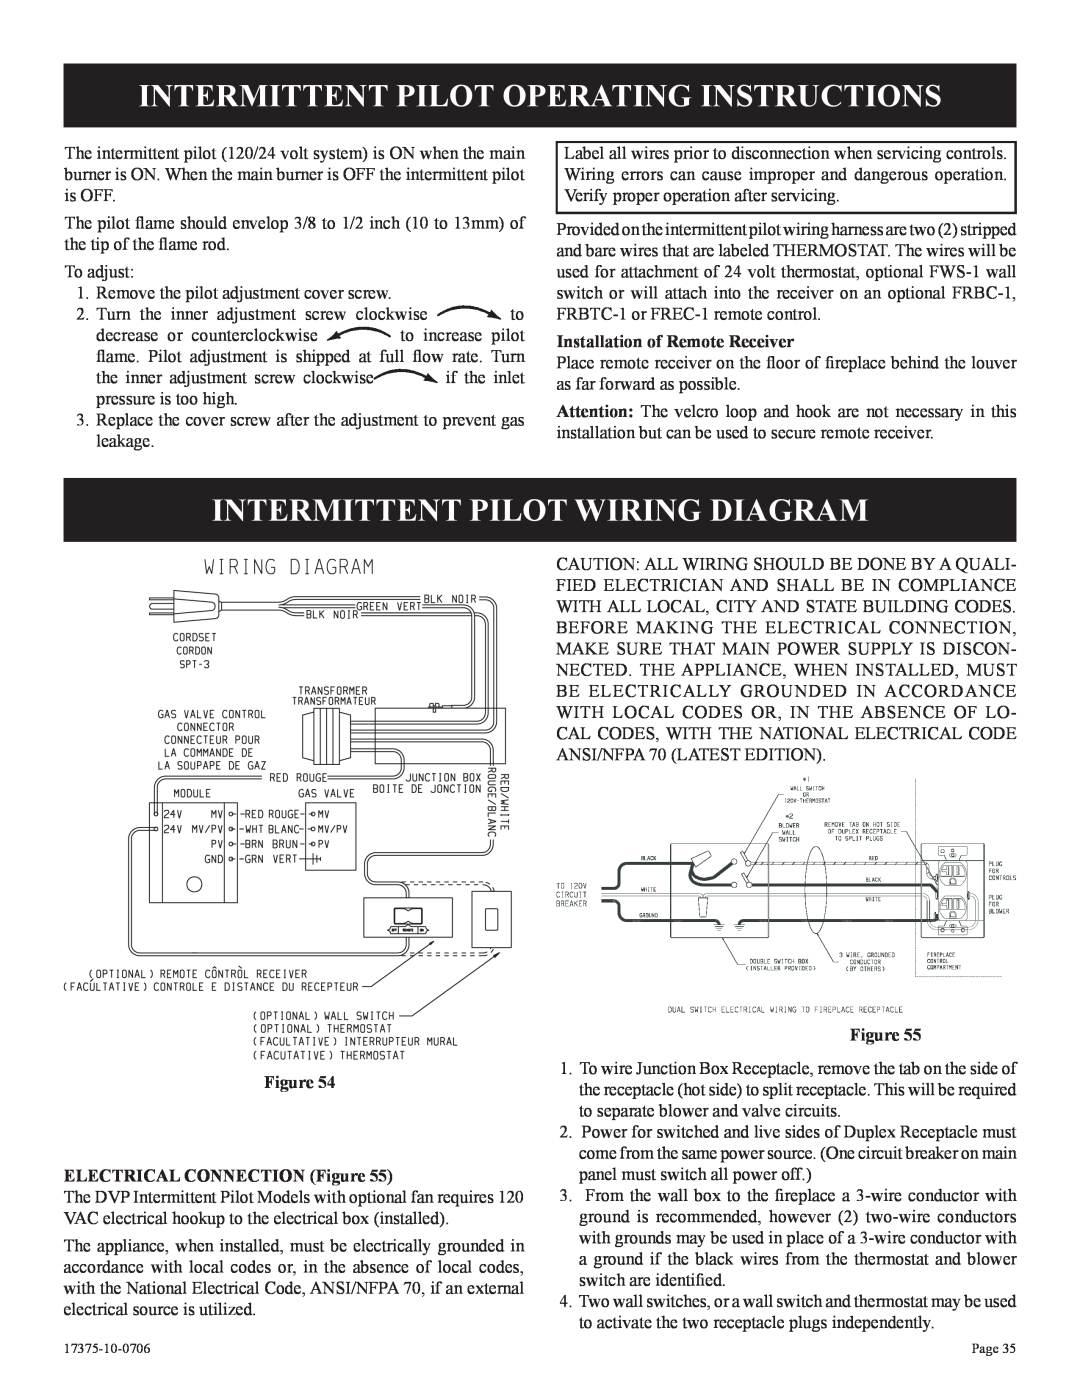 Empire Comfort Systems DVP48FP9(1,3)(N,P)-1 Intermittent Pilot Operating Instructions, Intermittent Pilot Wiring Diagram 